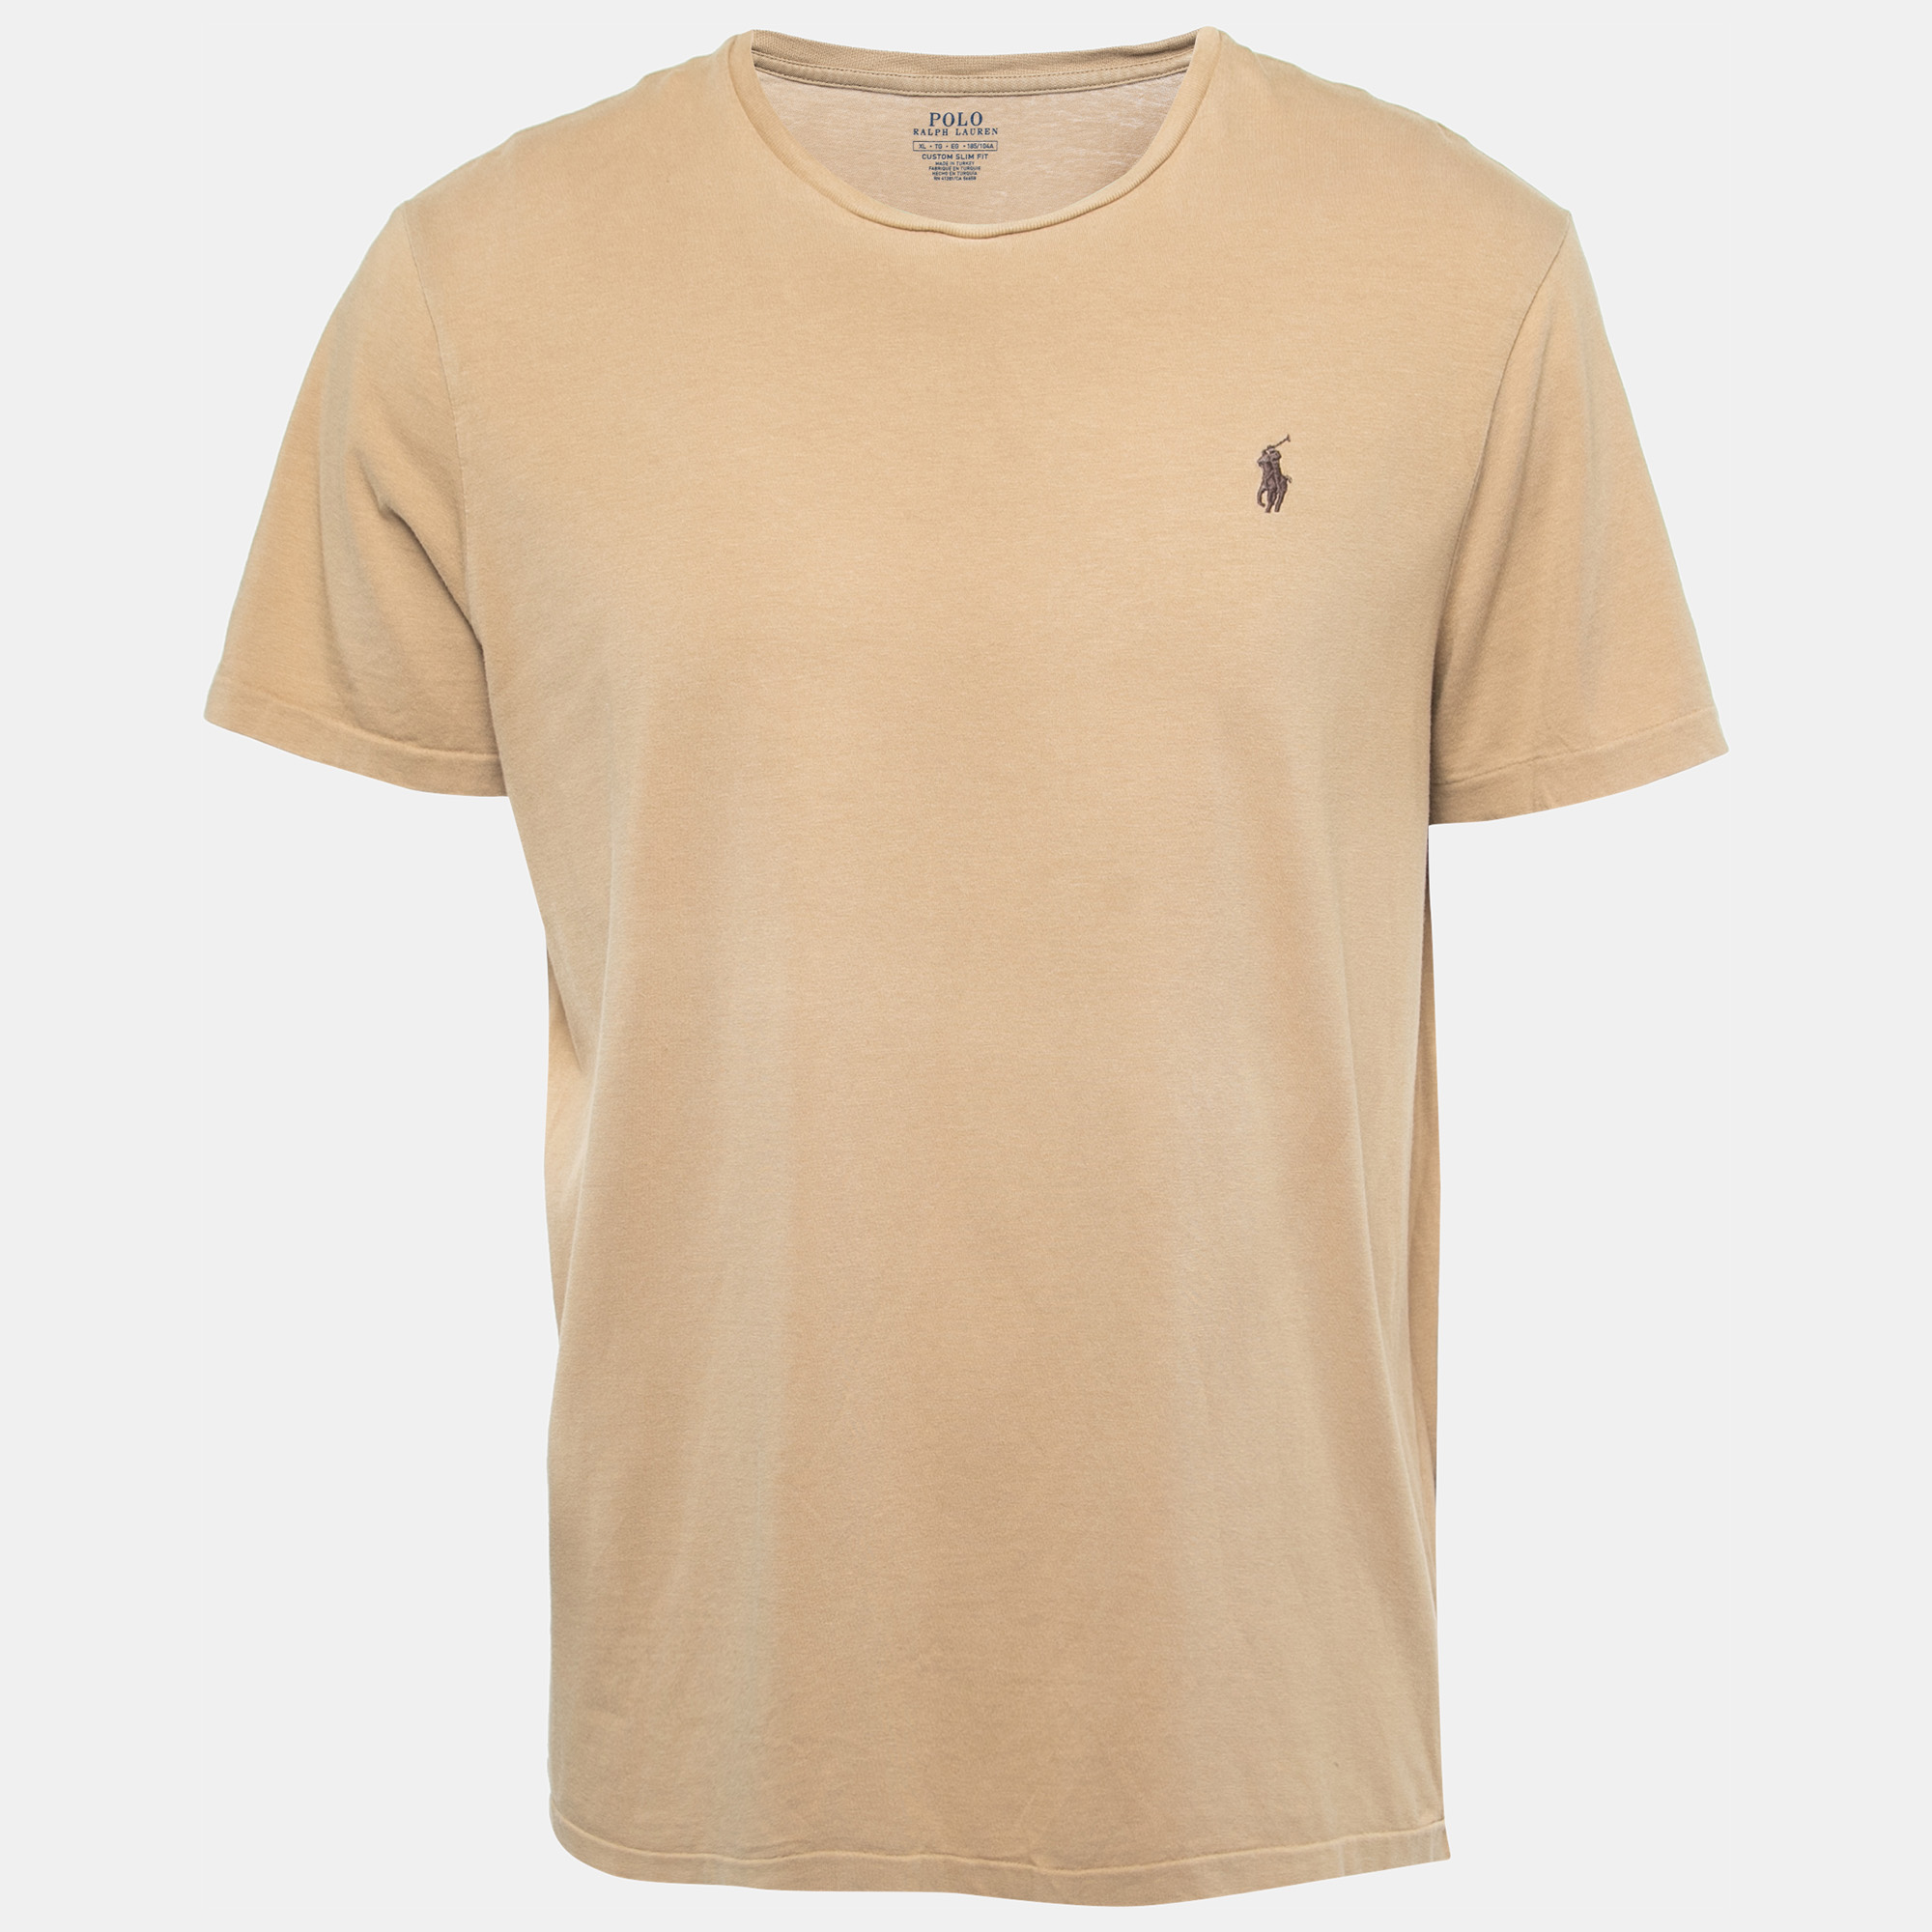 Polo Ralph Lauren Beige Cotton Custom Slim Fit T-Shirt XL